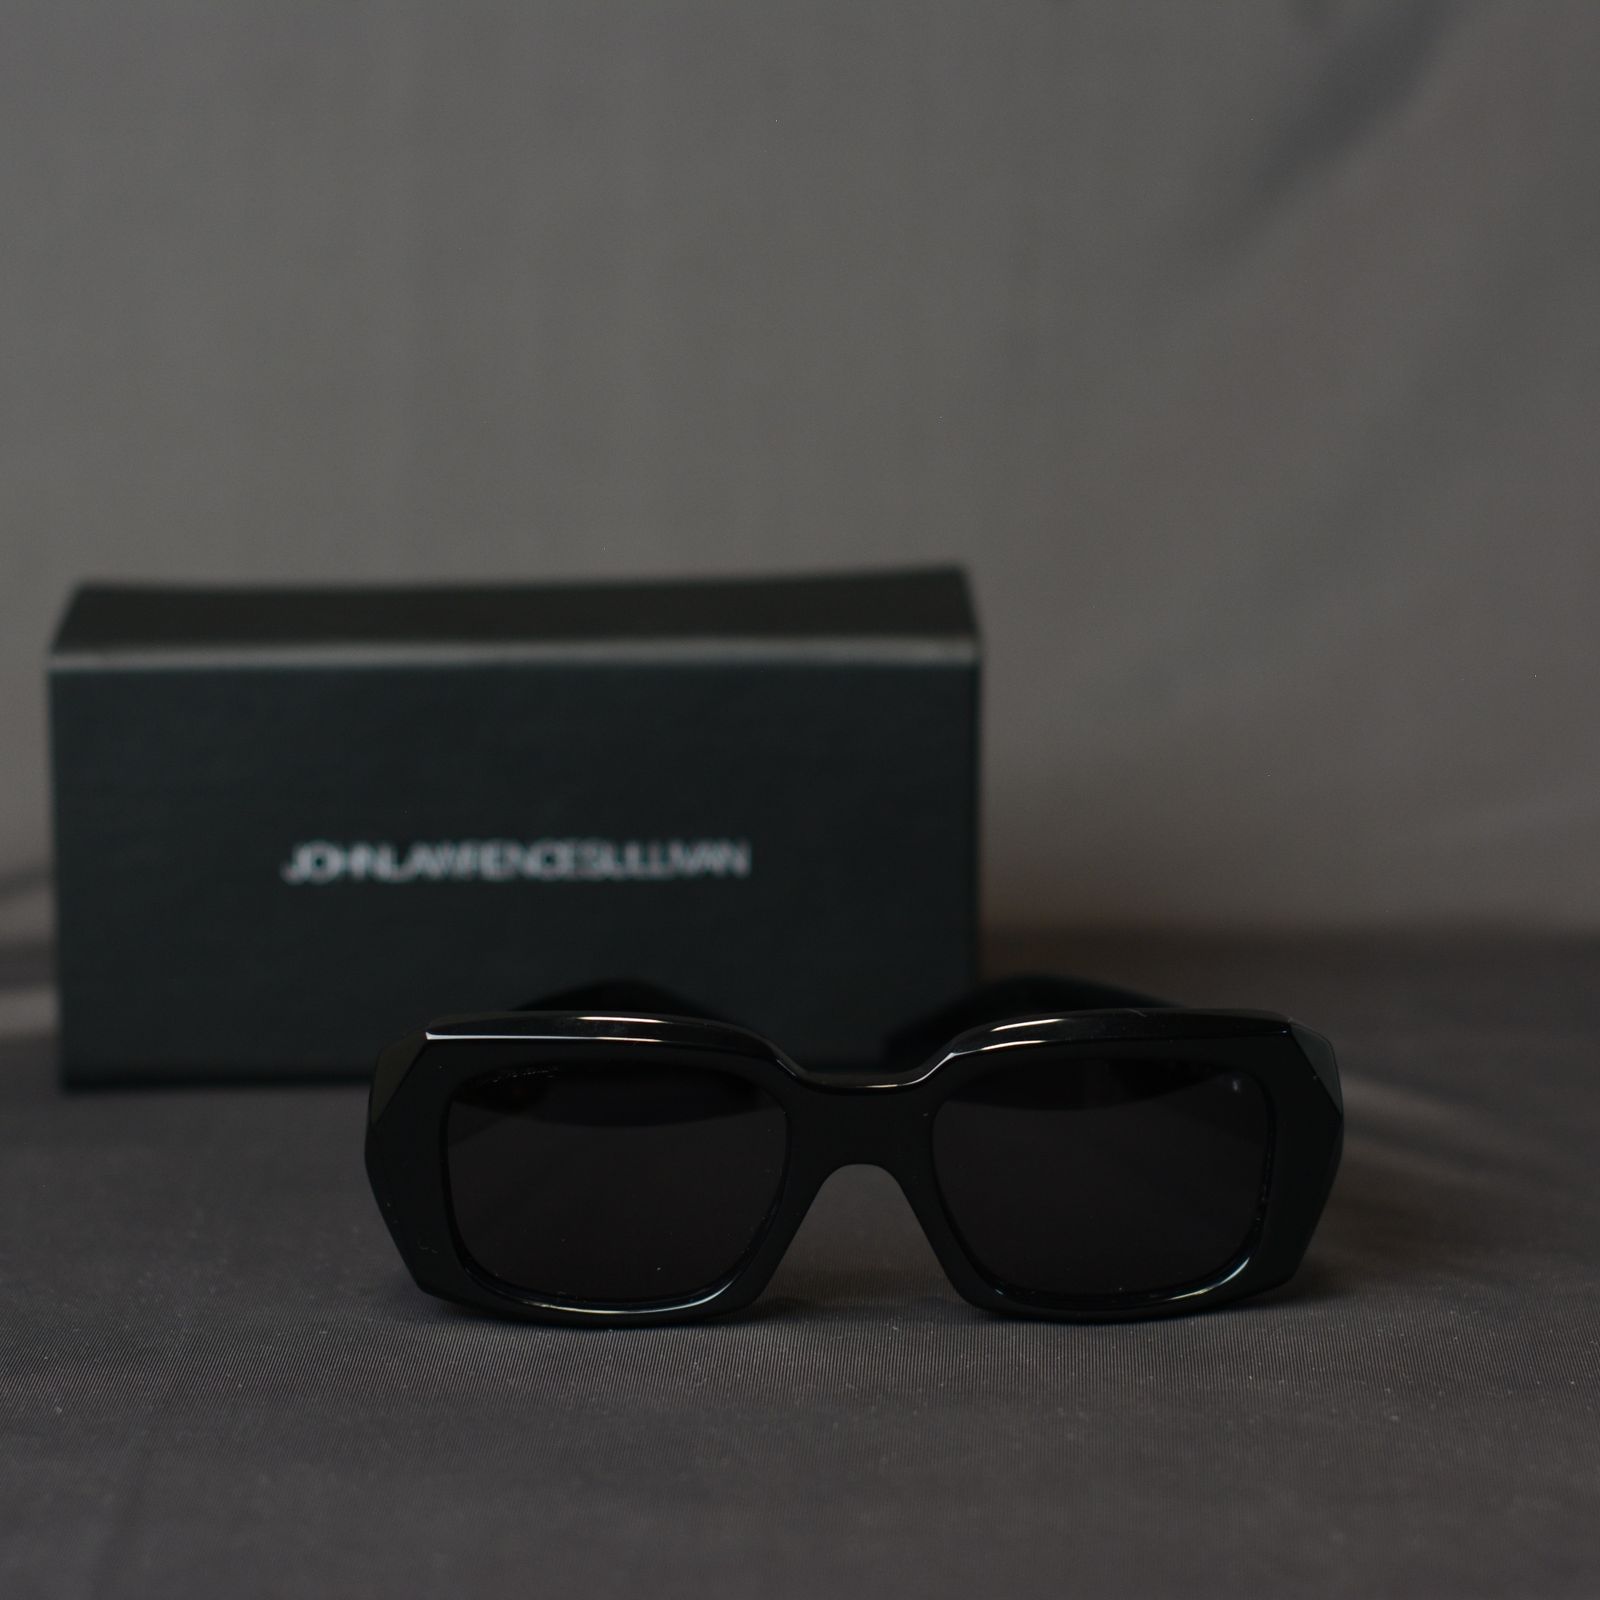 JOHNLAWRENCESULLIVAN - Television cut glasses | chord online store